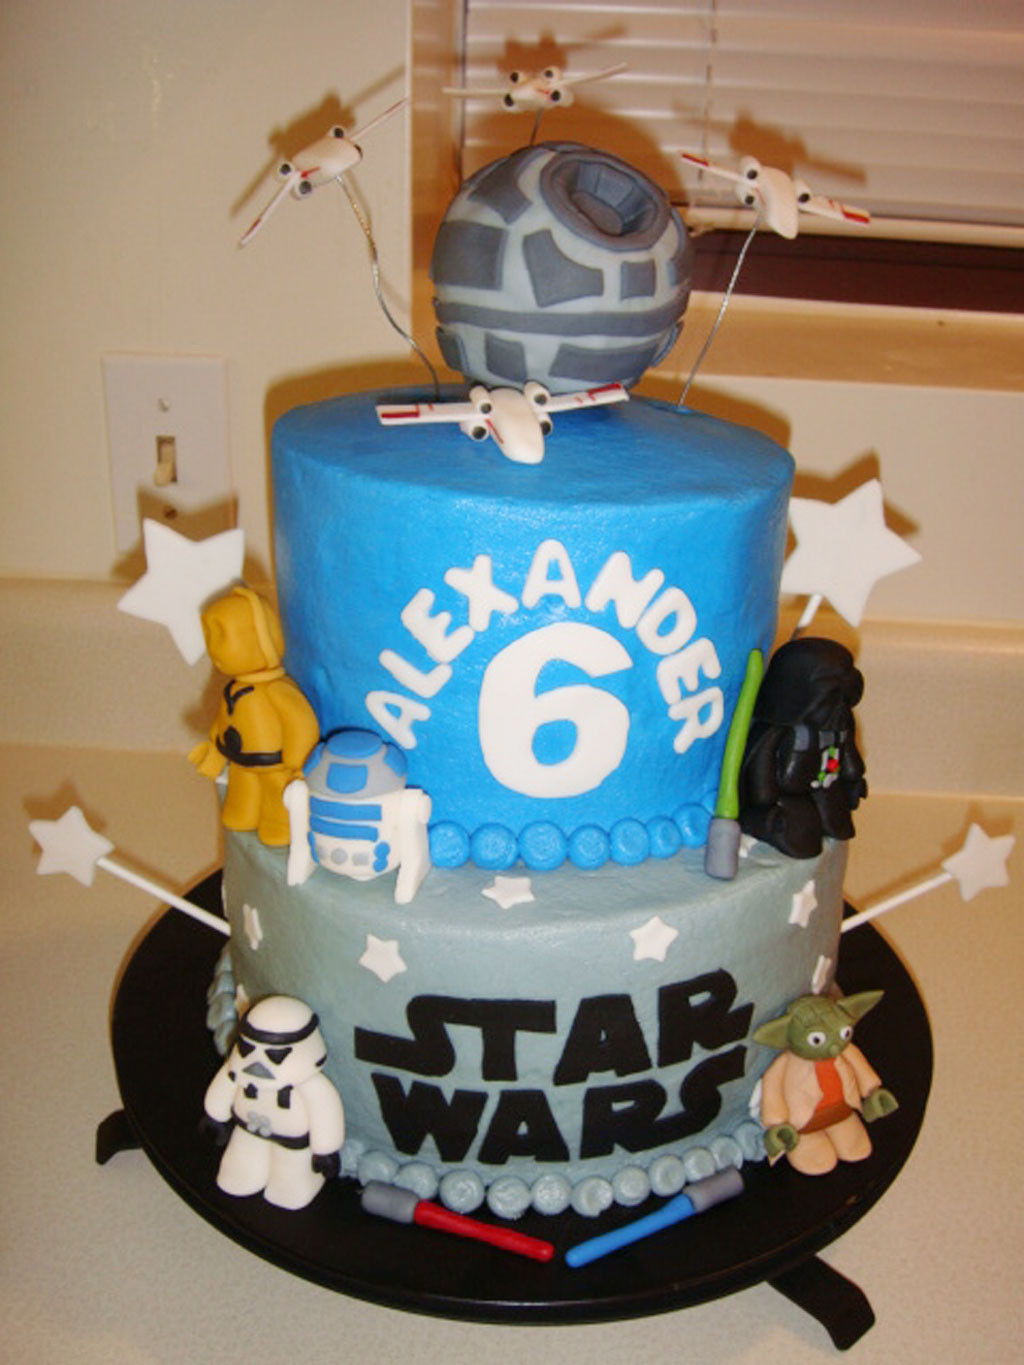 Star Wars Birthday Cake Decorations
 Star Wars Birthday Cakes Decorations Birthday Cake Cake